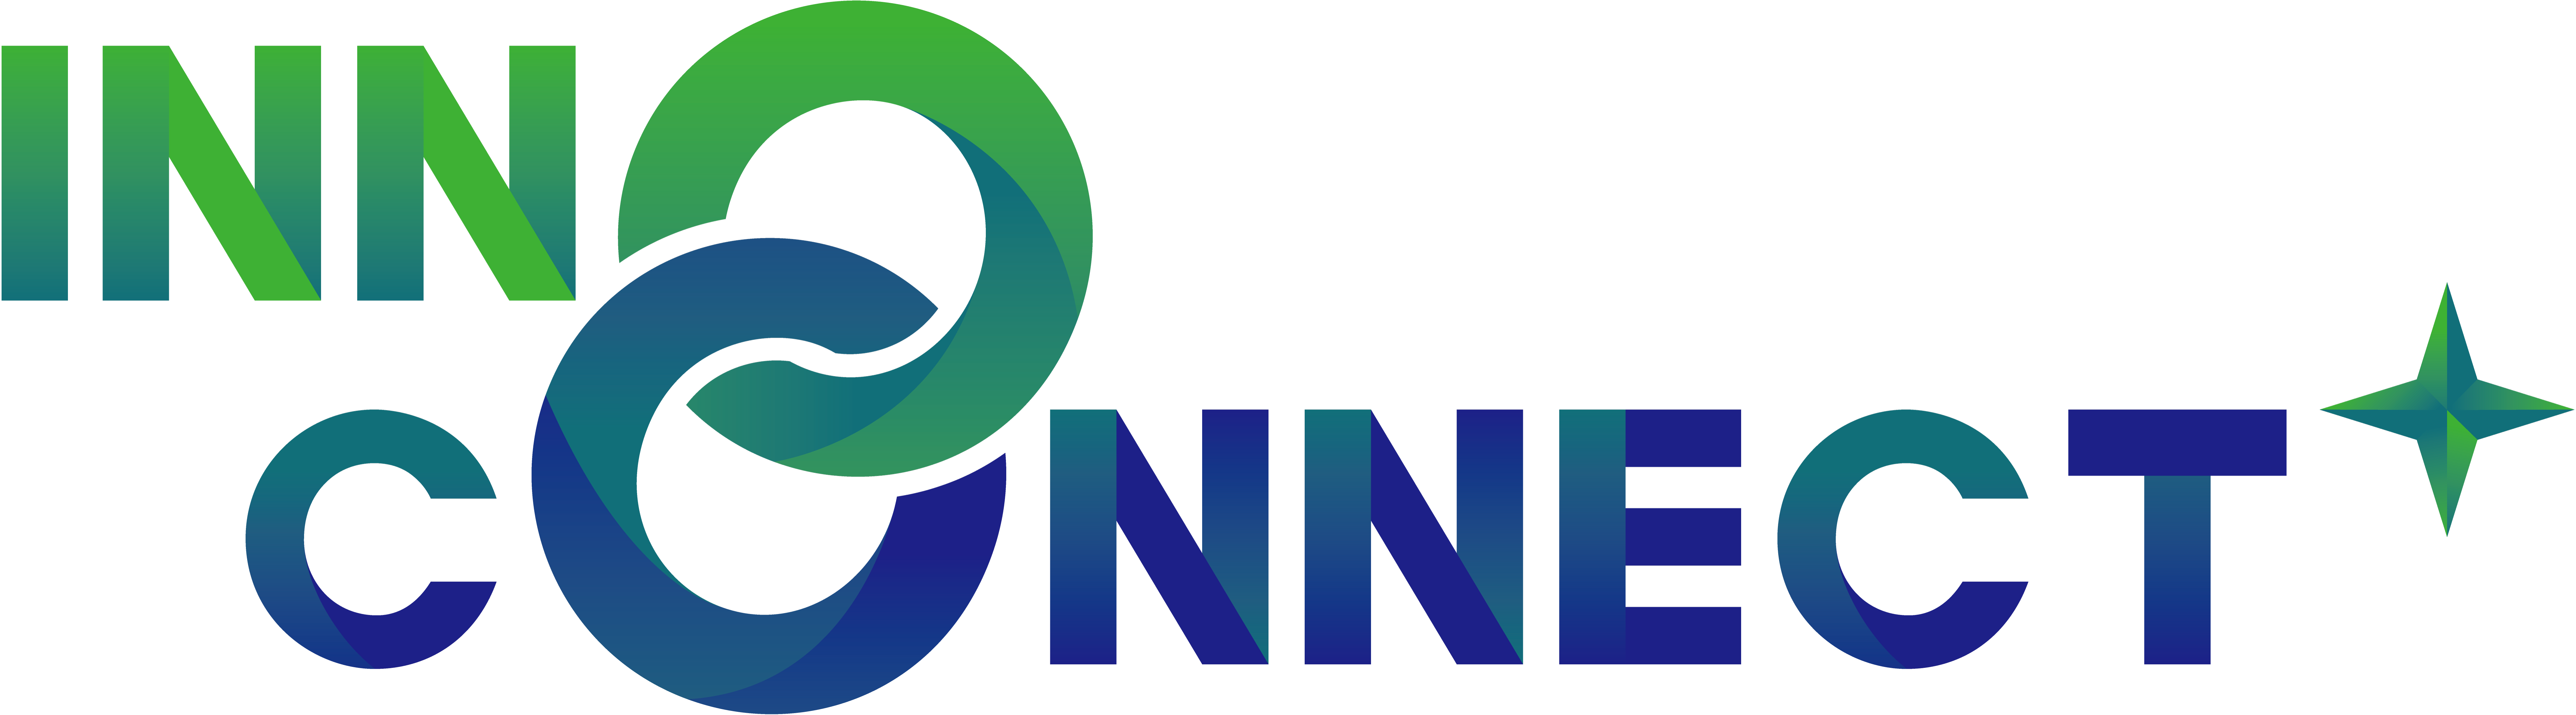 InnoConnect+ 全國服務創新跨界共創大賽logo